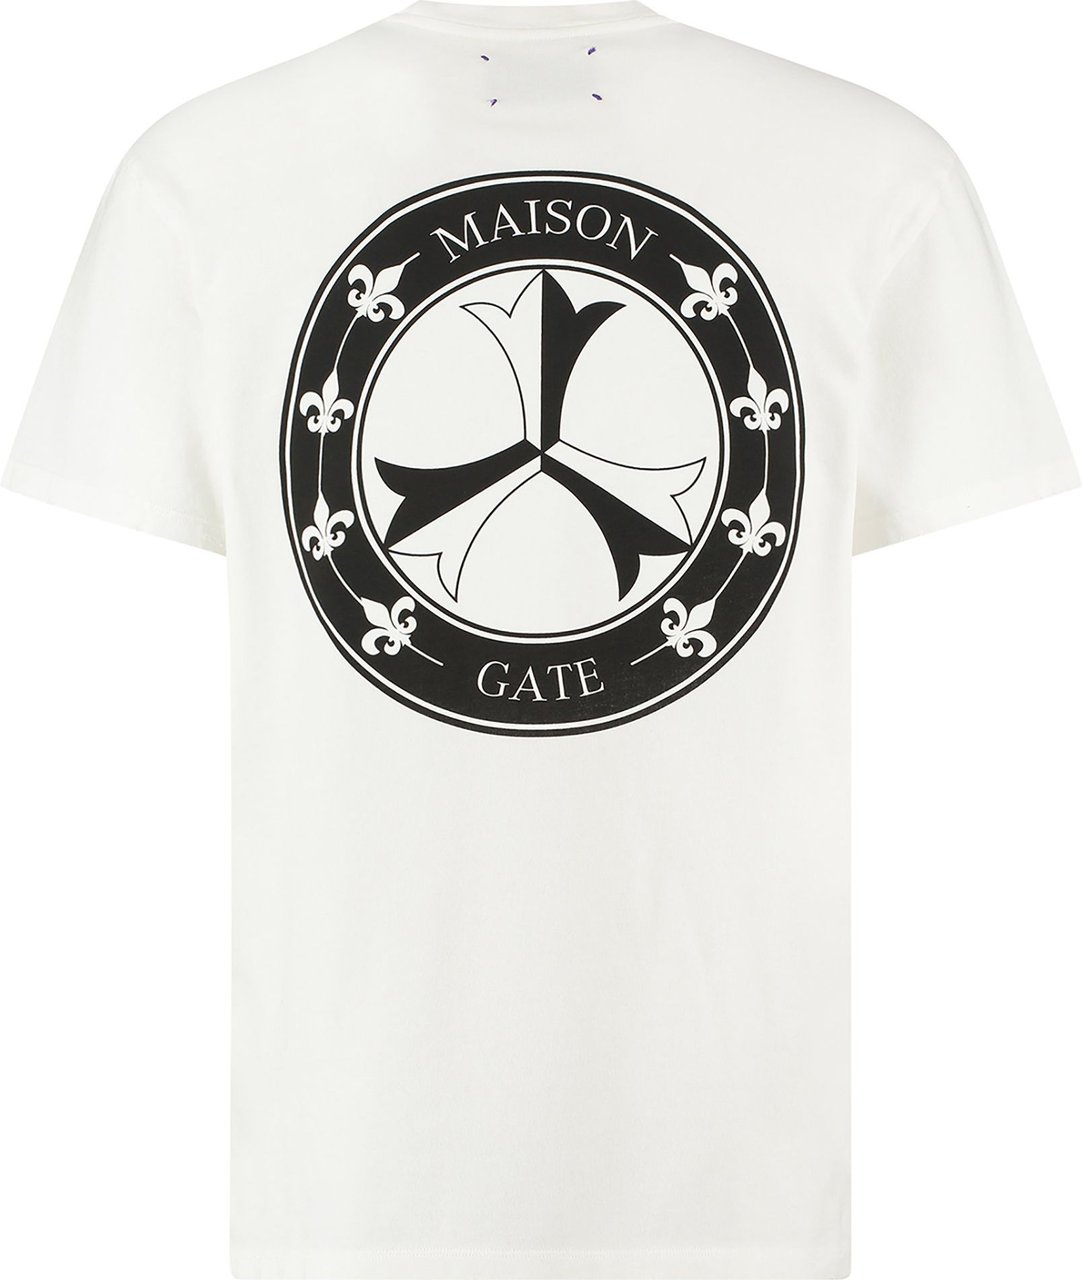 Maison Gate Merry Snow White T-shirt Wit